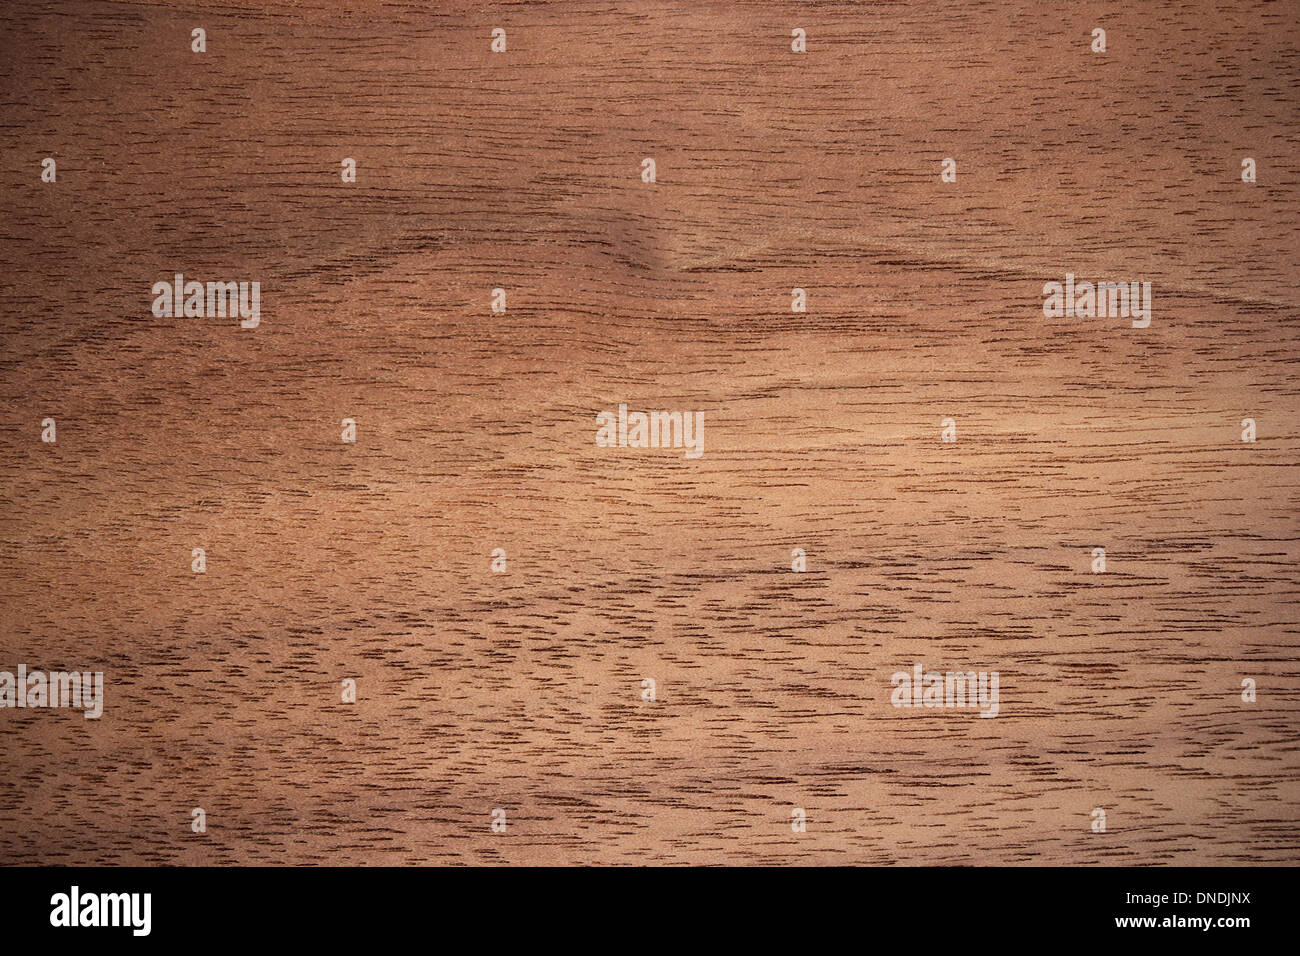 Wood surface, american walnut (Juglans nigra) - horizontal lines Stock Photo